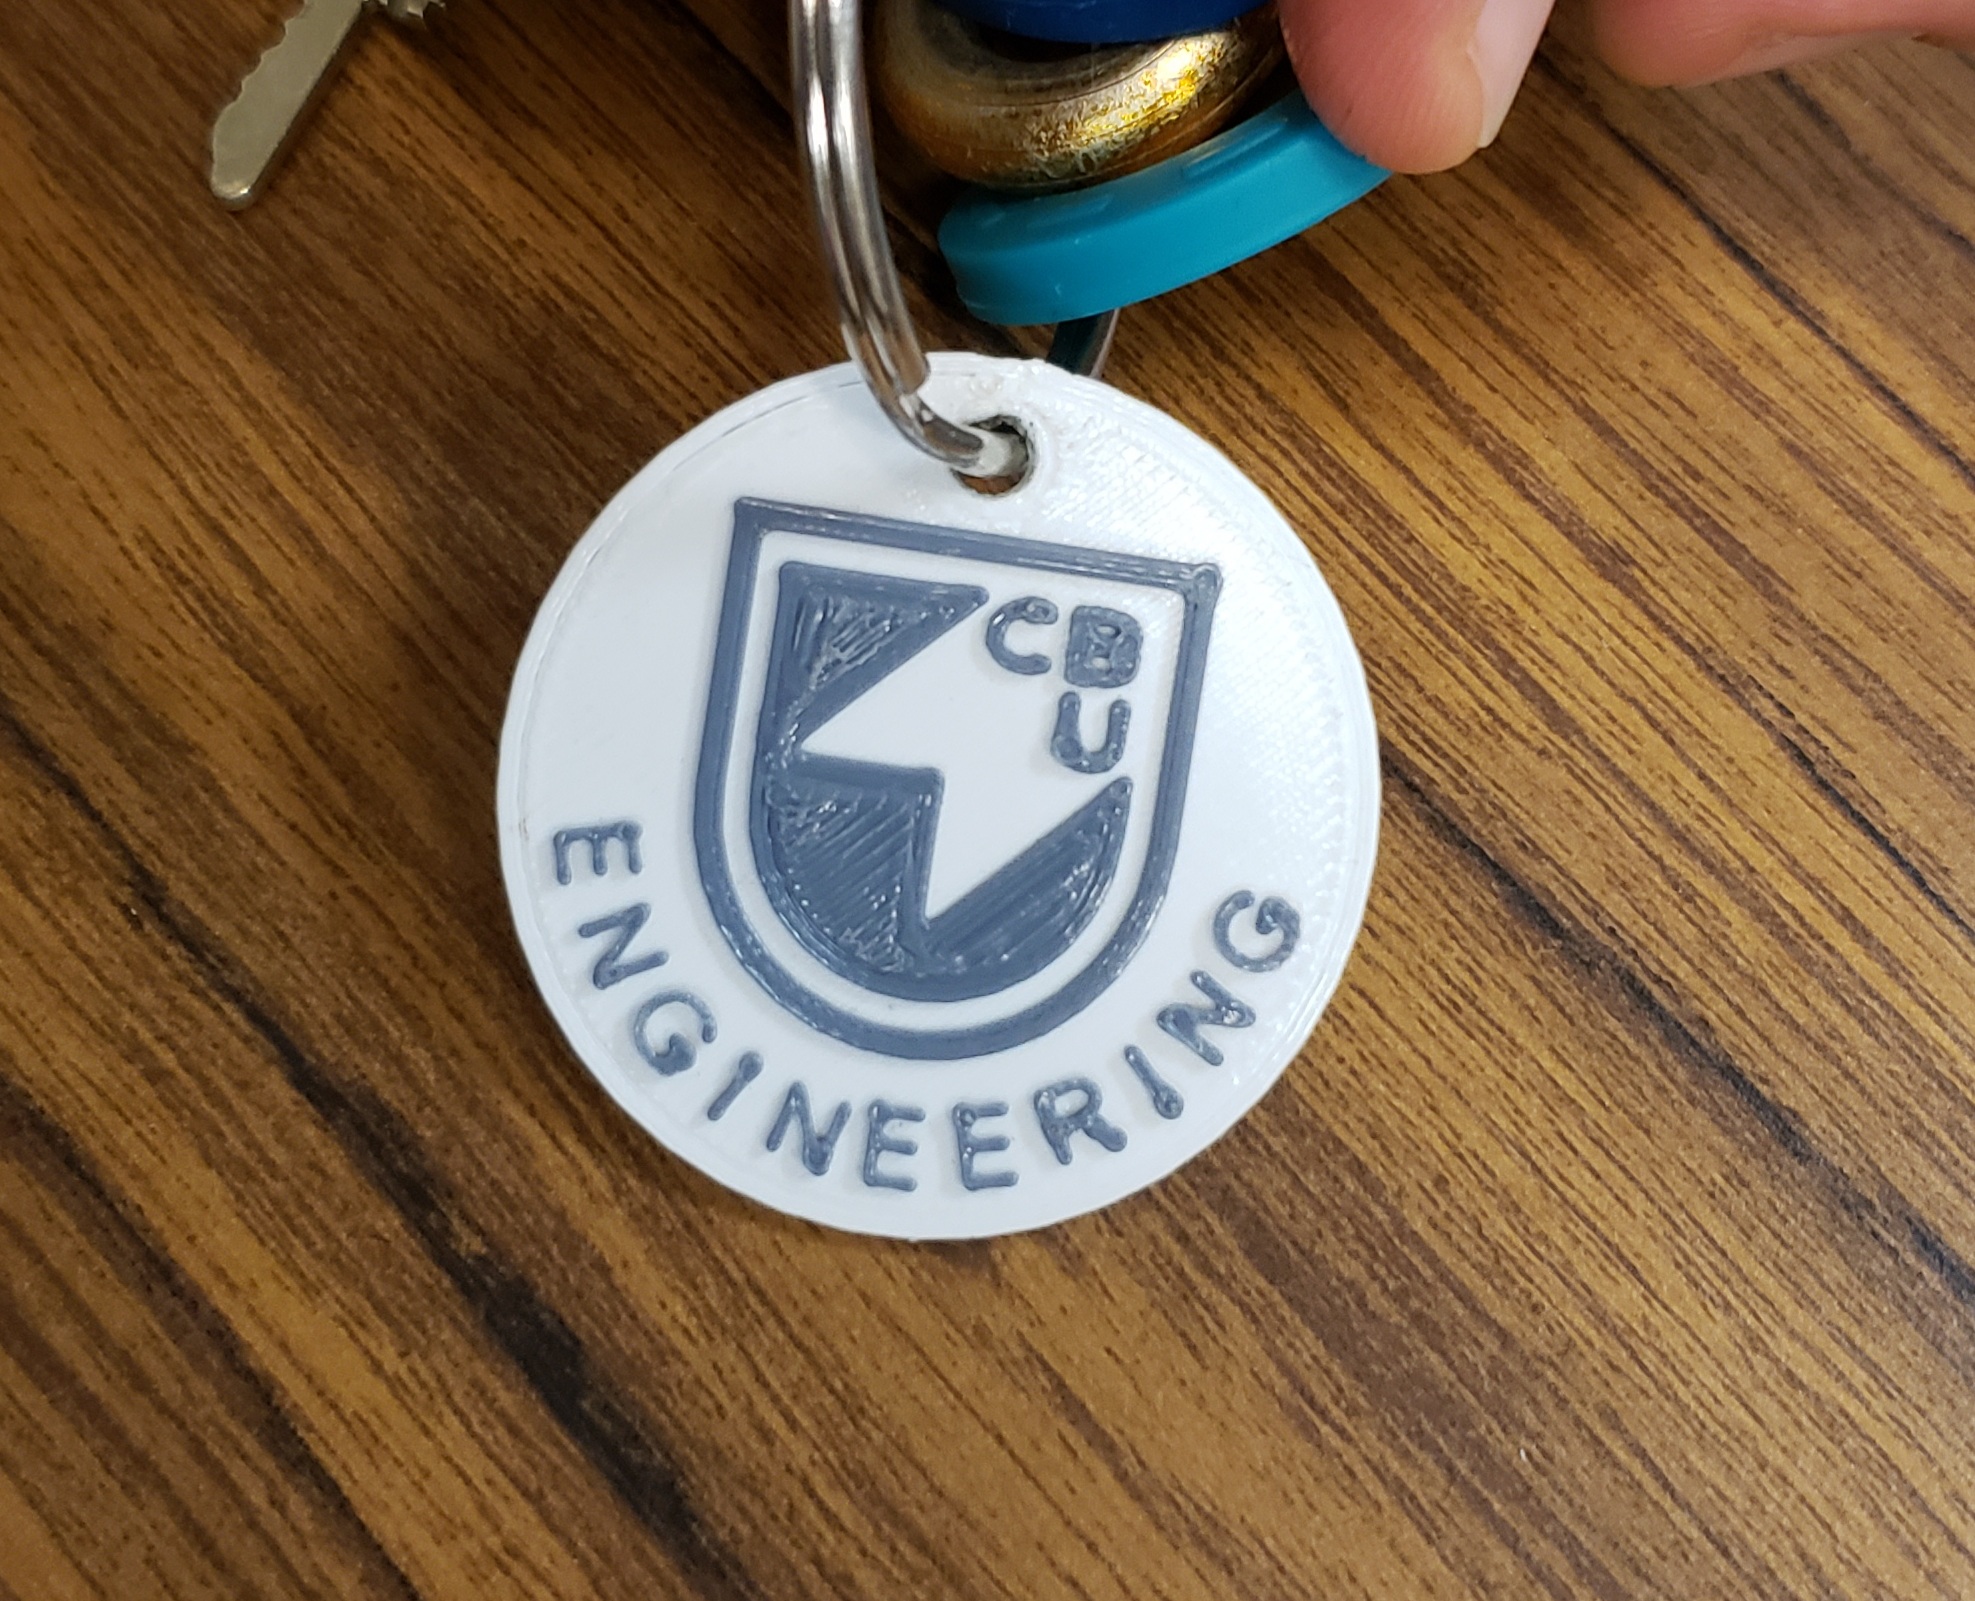 CBU (Cape Breton University) Engineering logo key tag